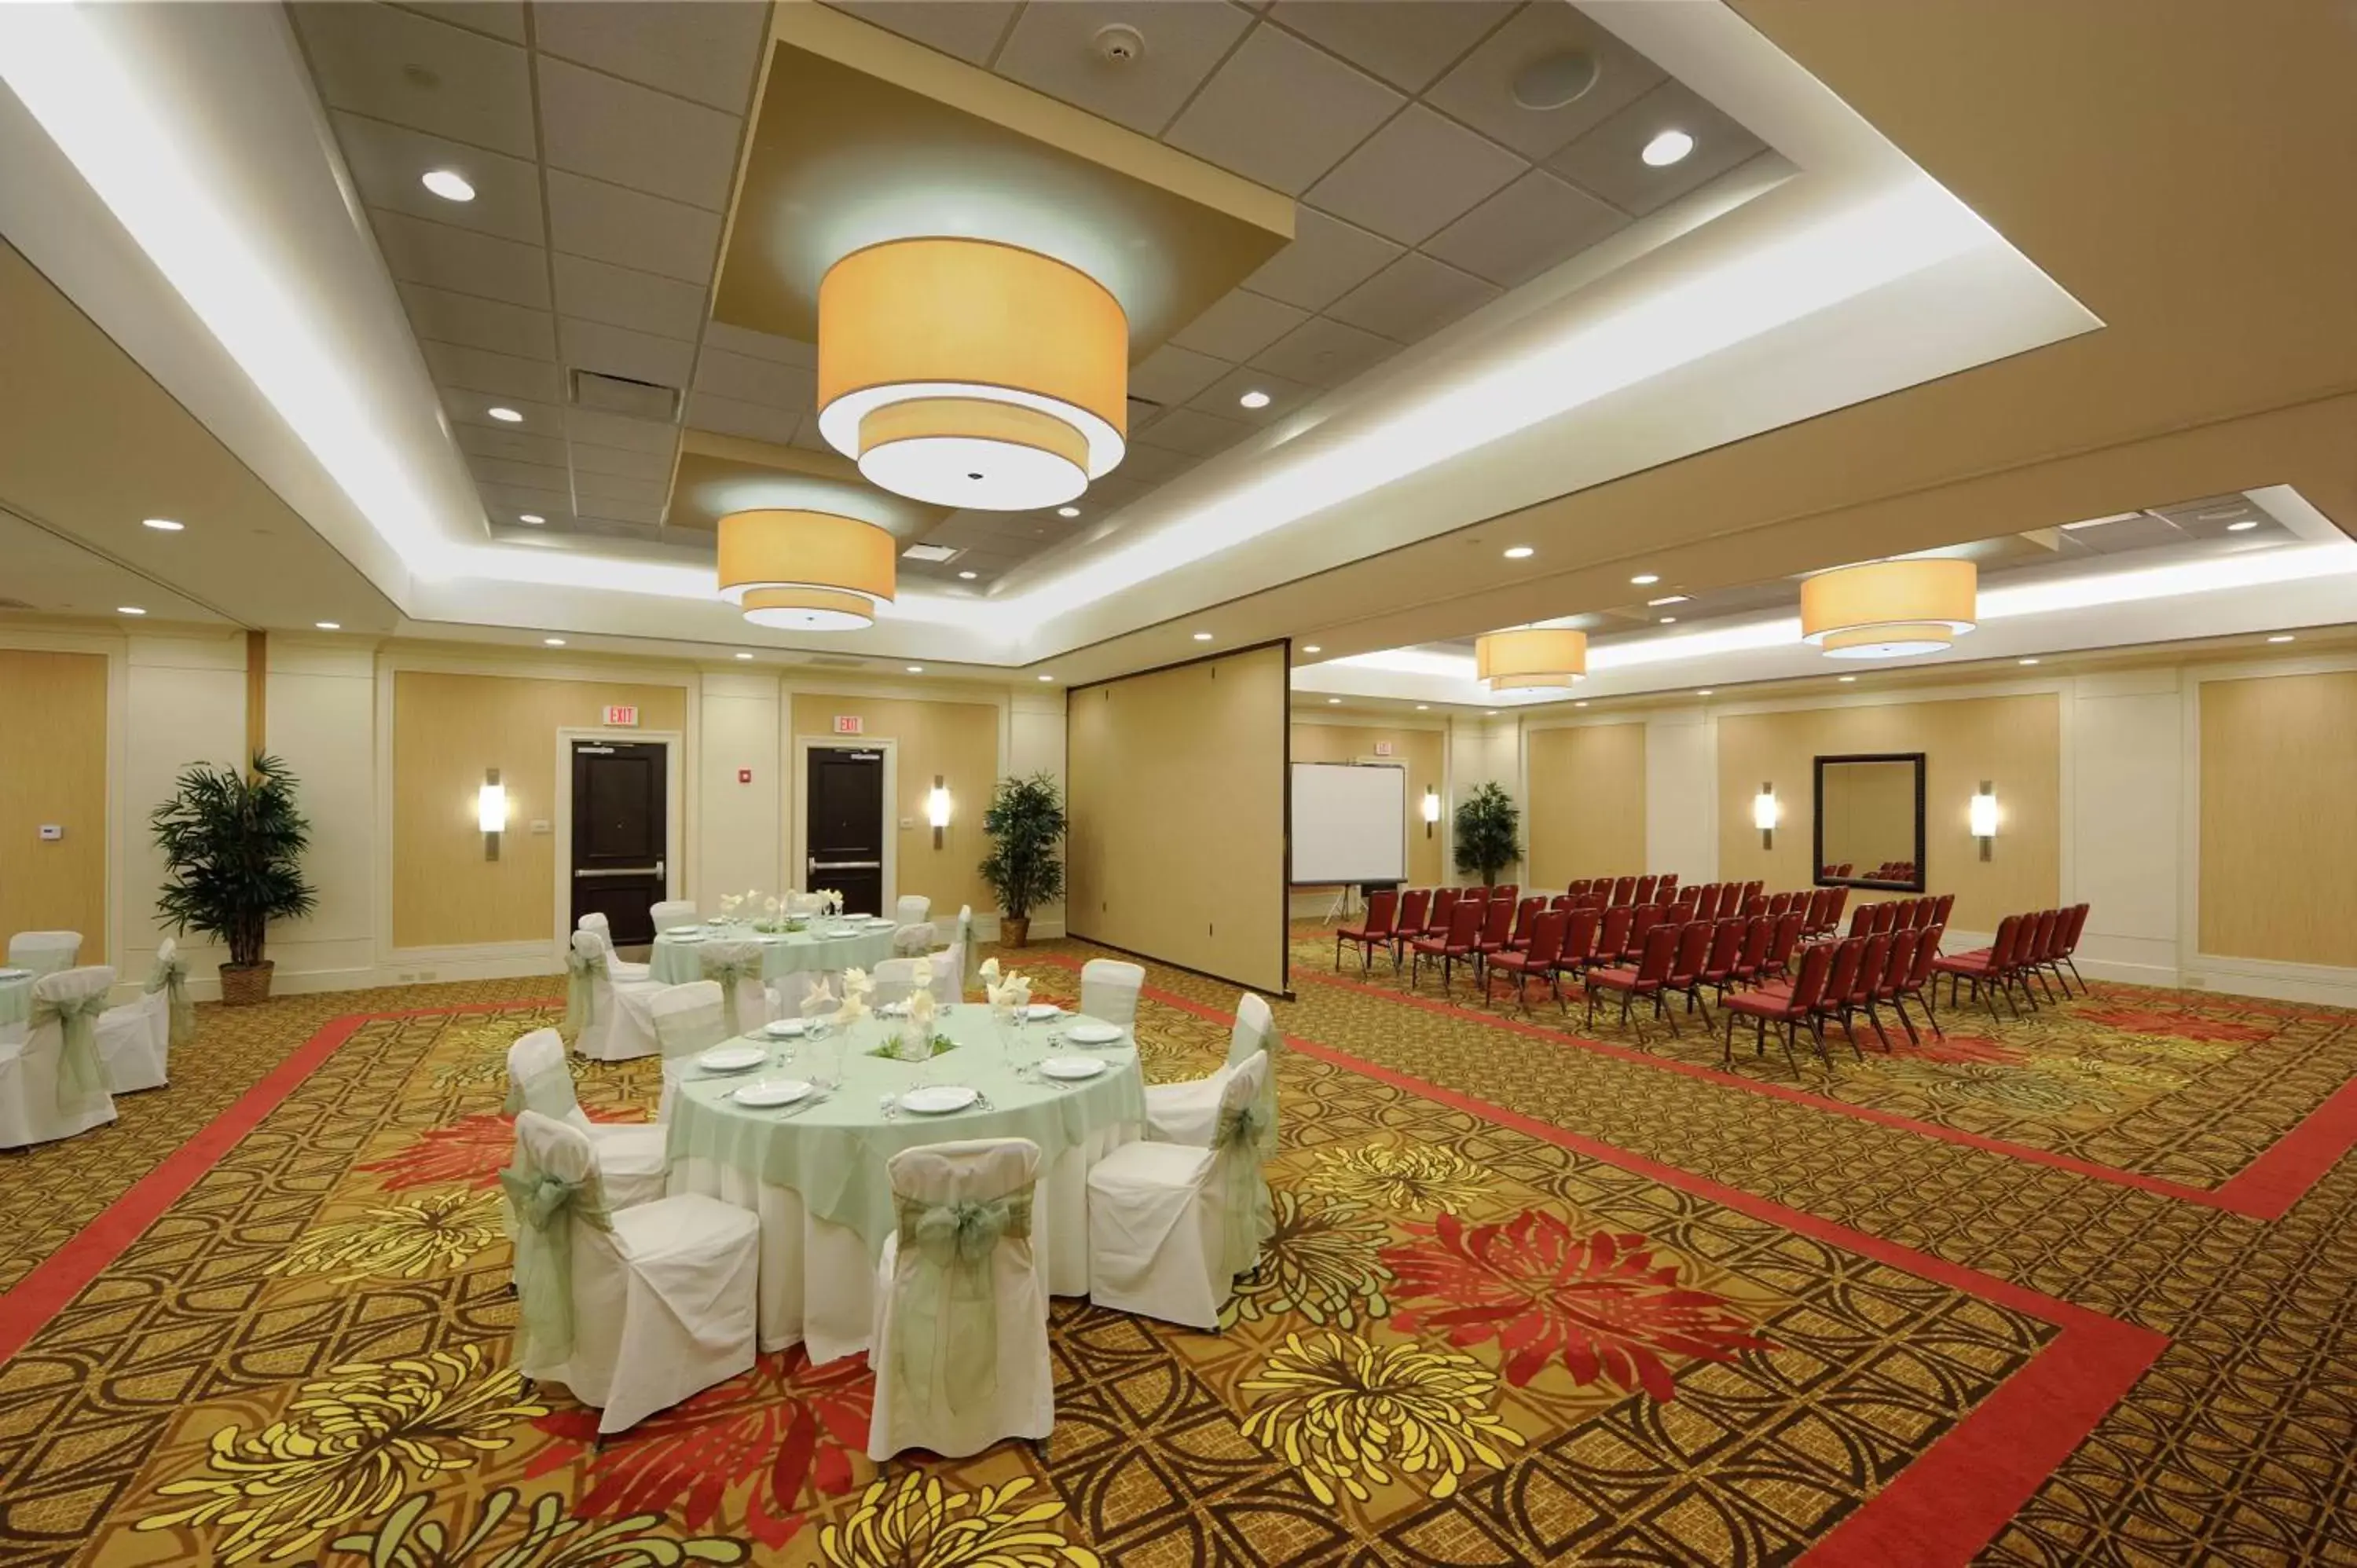 Meeting/conference room, Banquet Facilities in Hilton Garden Inn Atlanta Airport North